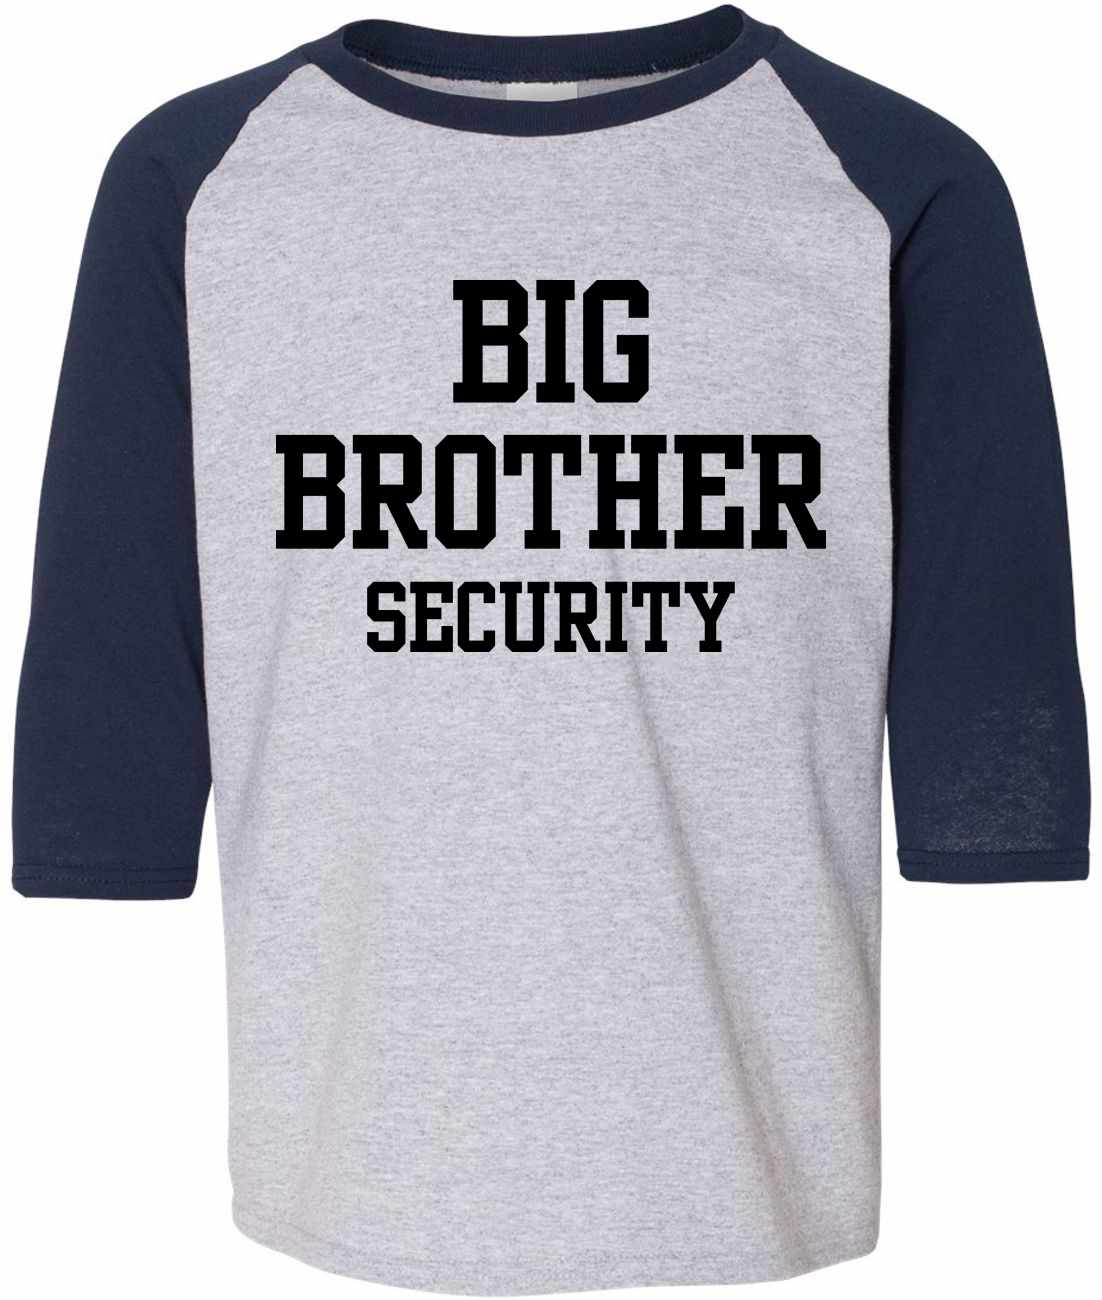 Big Brother Security on Youth Baseball Shirt (#1136-212)